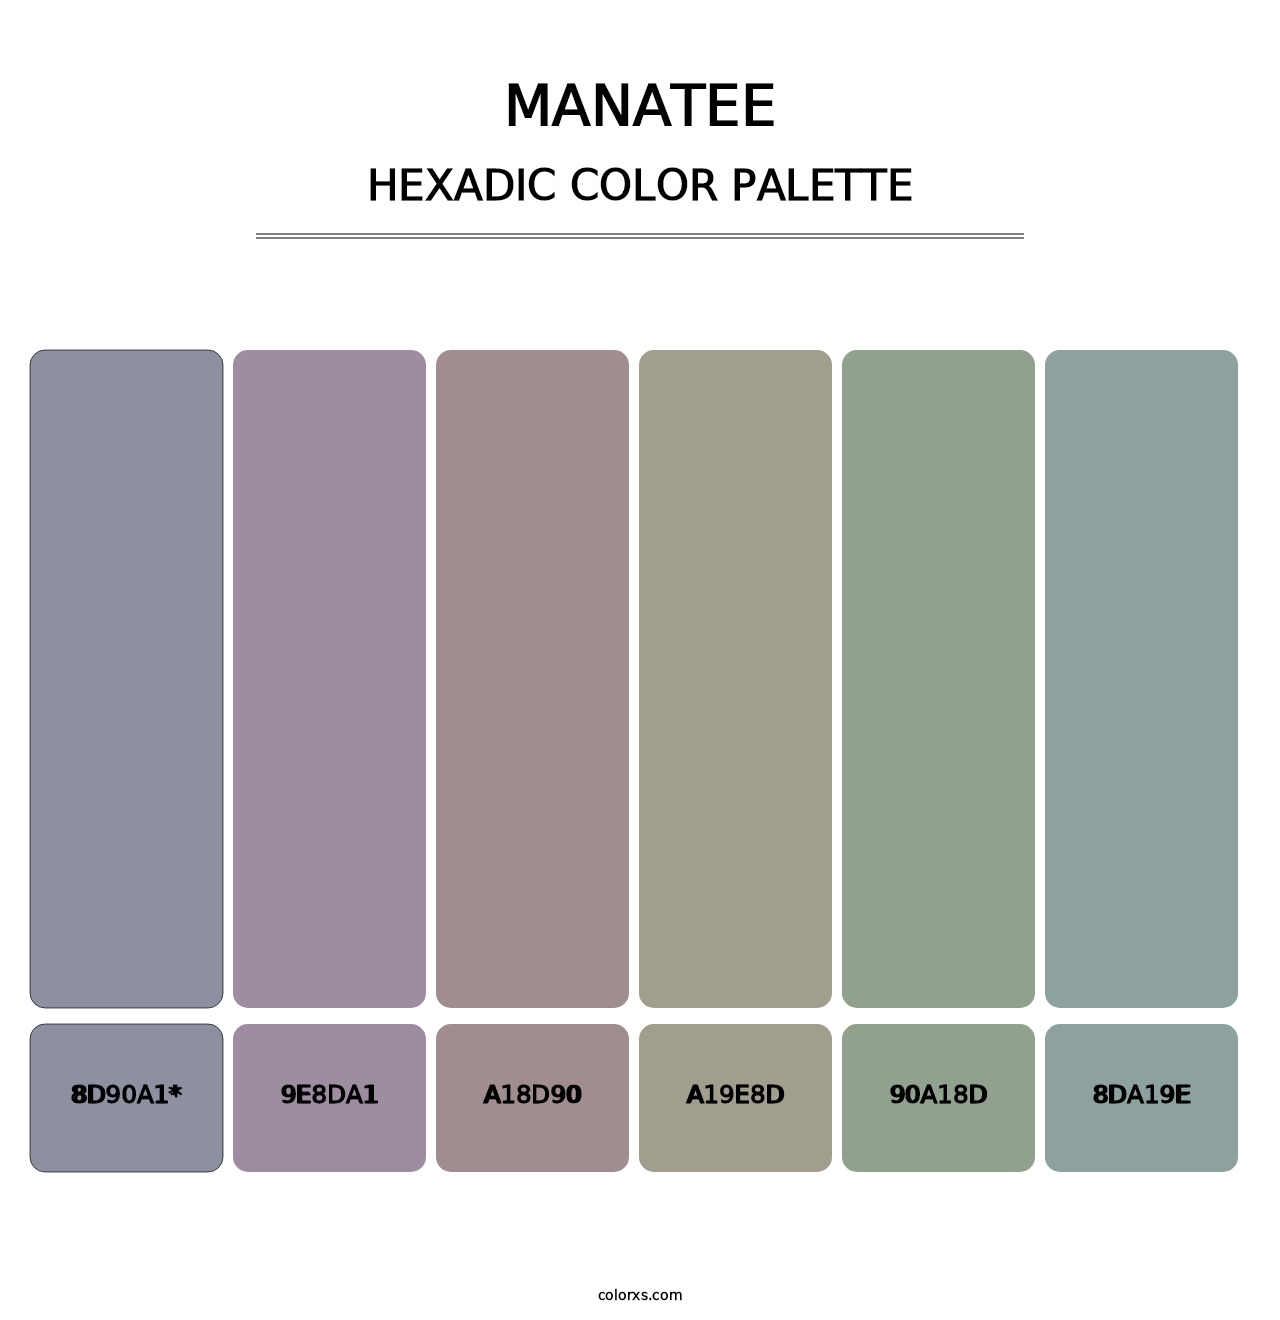 Manatee - Hexadic Color Palette